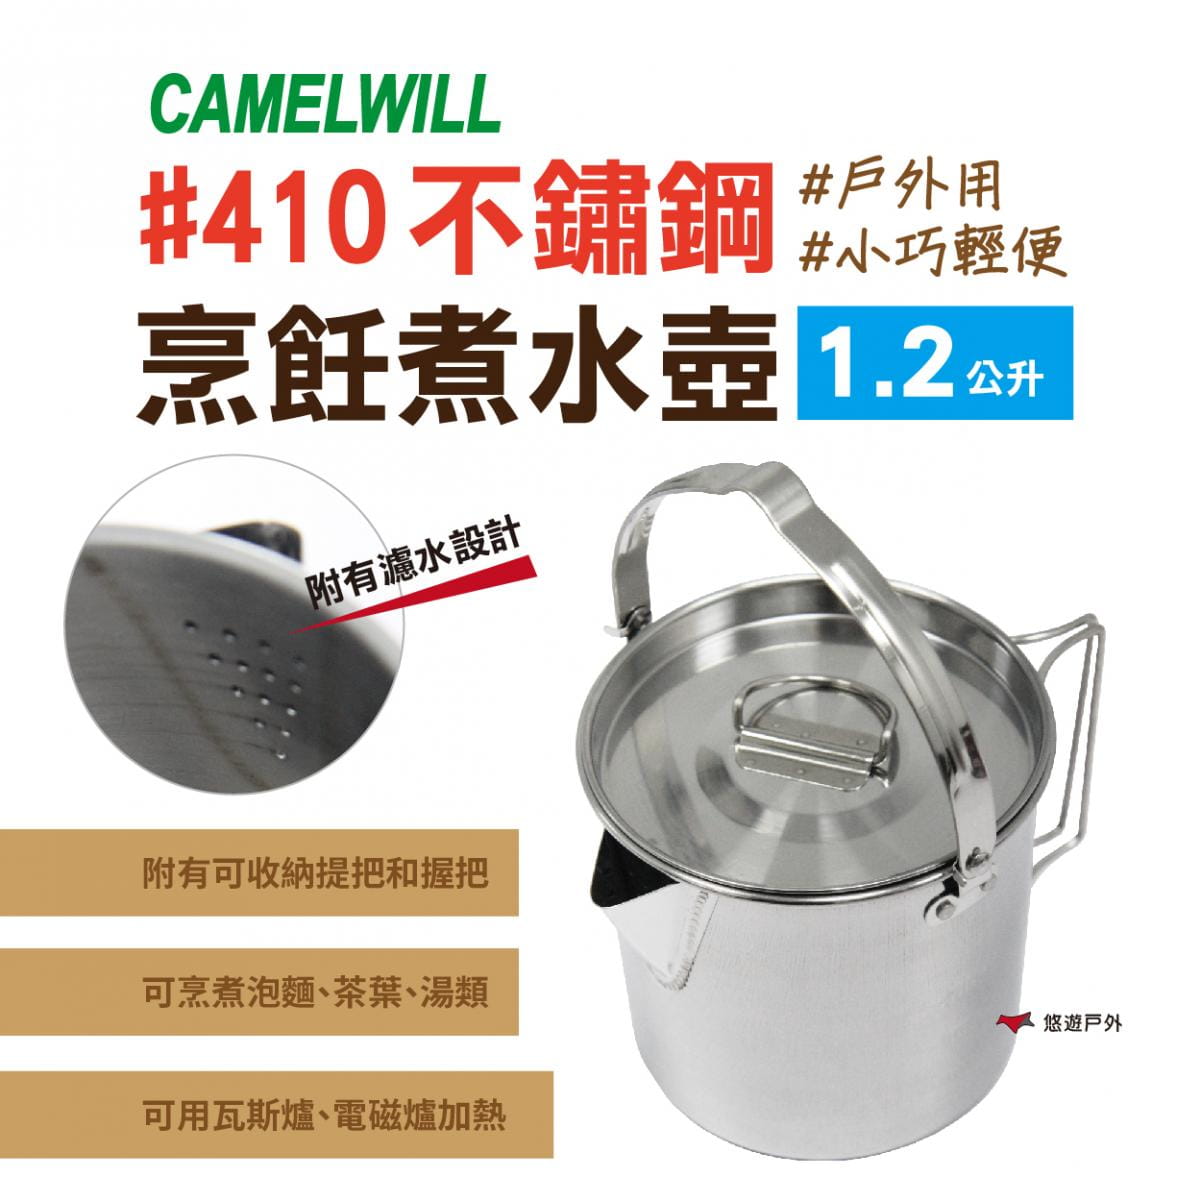 【CAMELWILL】CW-307 野營水煮壺 不銹鋼 戶外烹飪水壺 1.2L 輕便小巧 野營壺 0